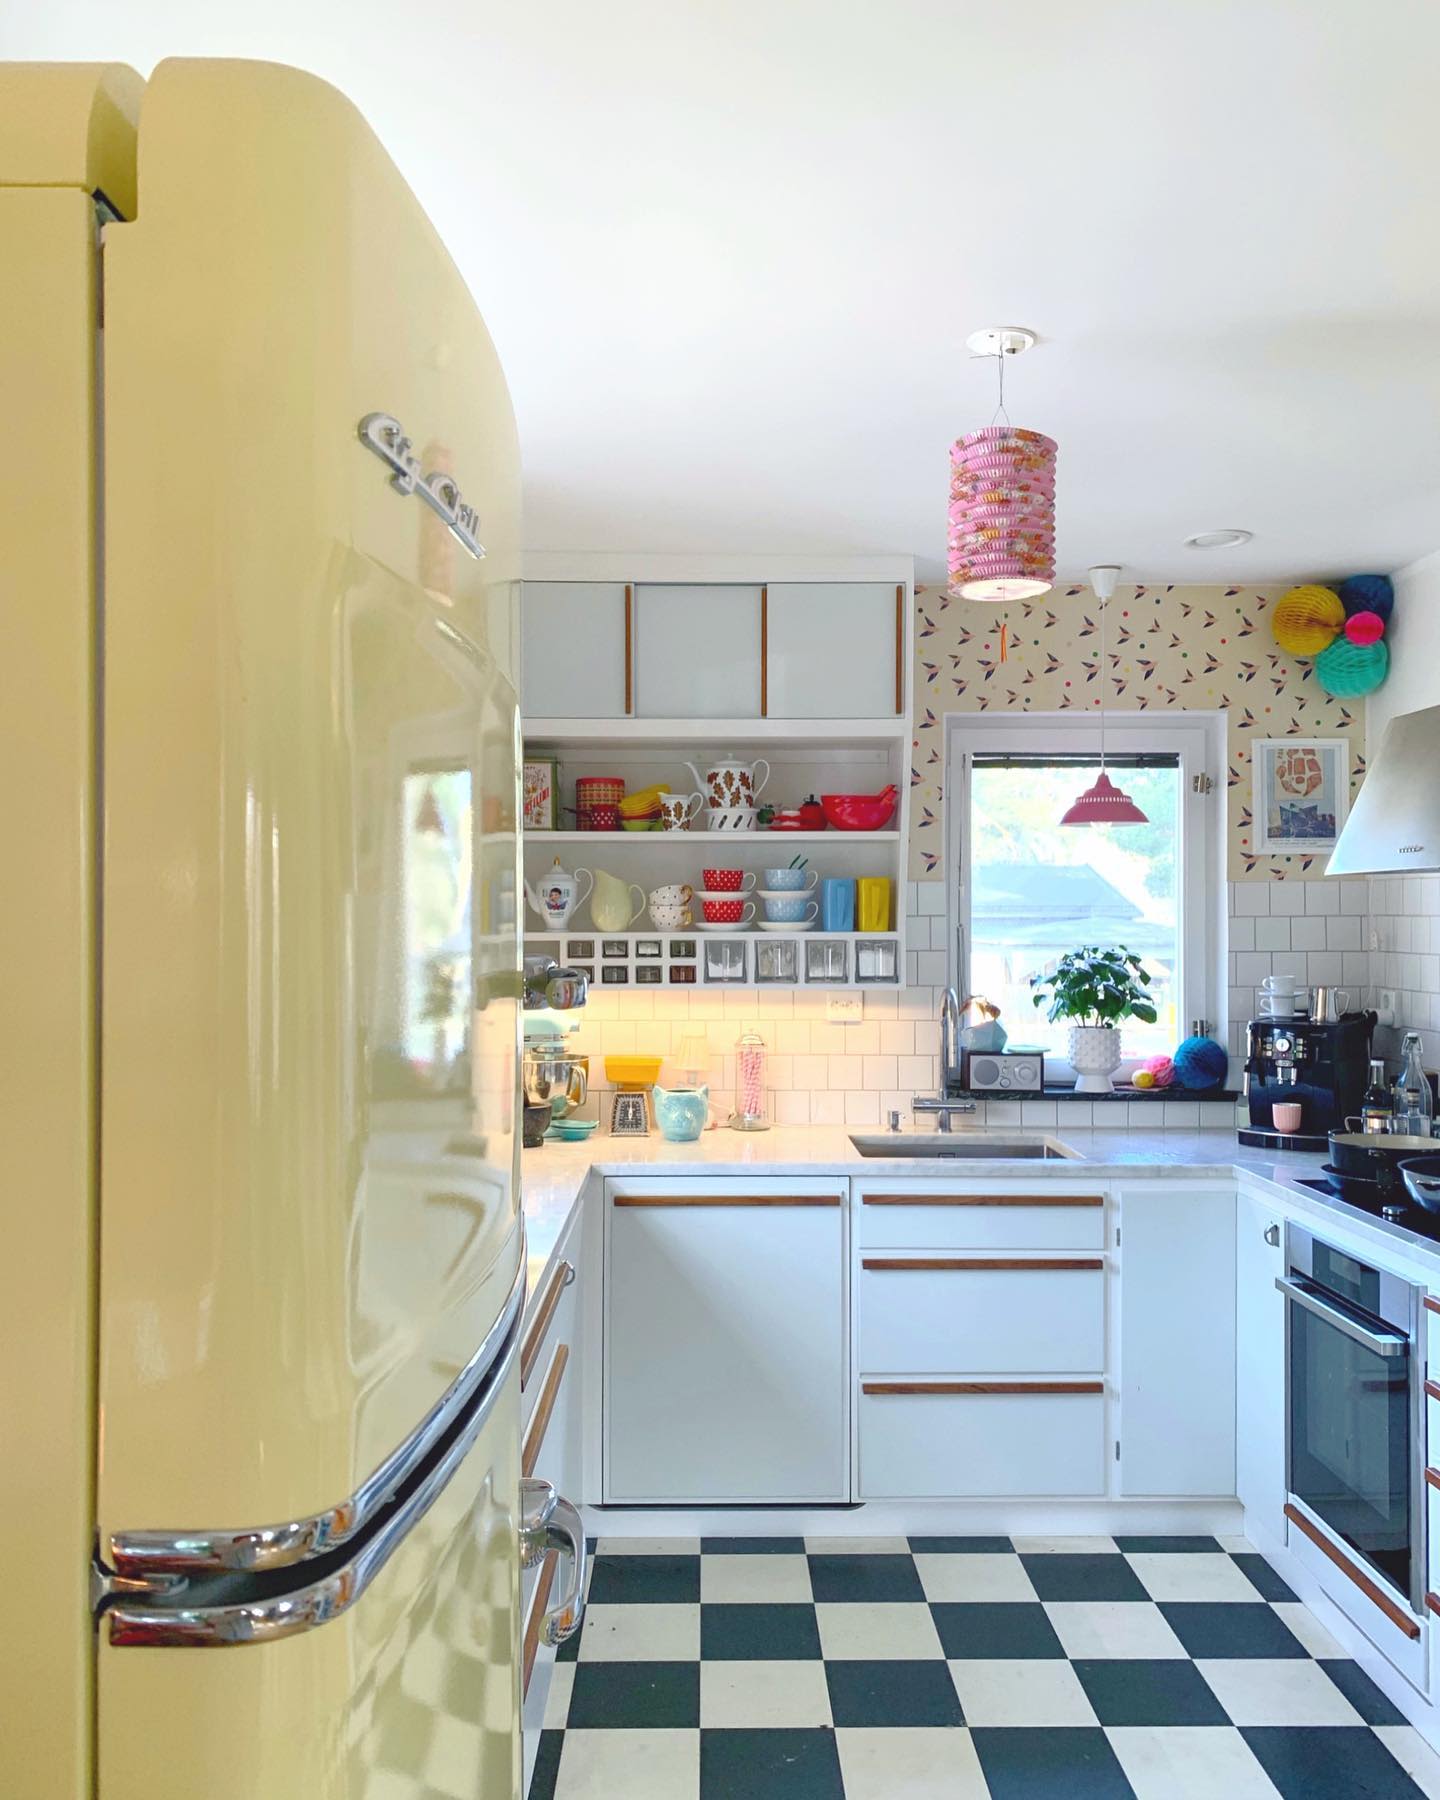 20 Cool Retro Kitchens   Fun Kitchens With Vintage Style ...